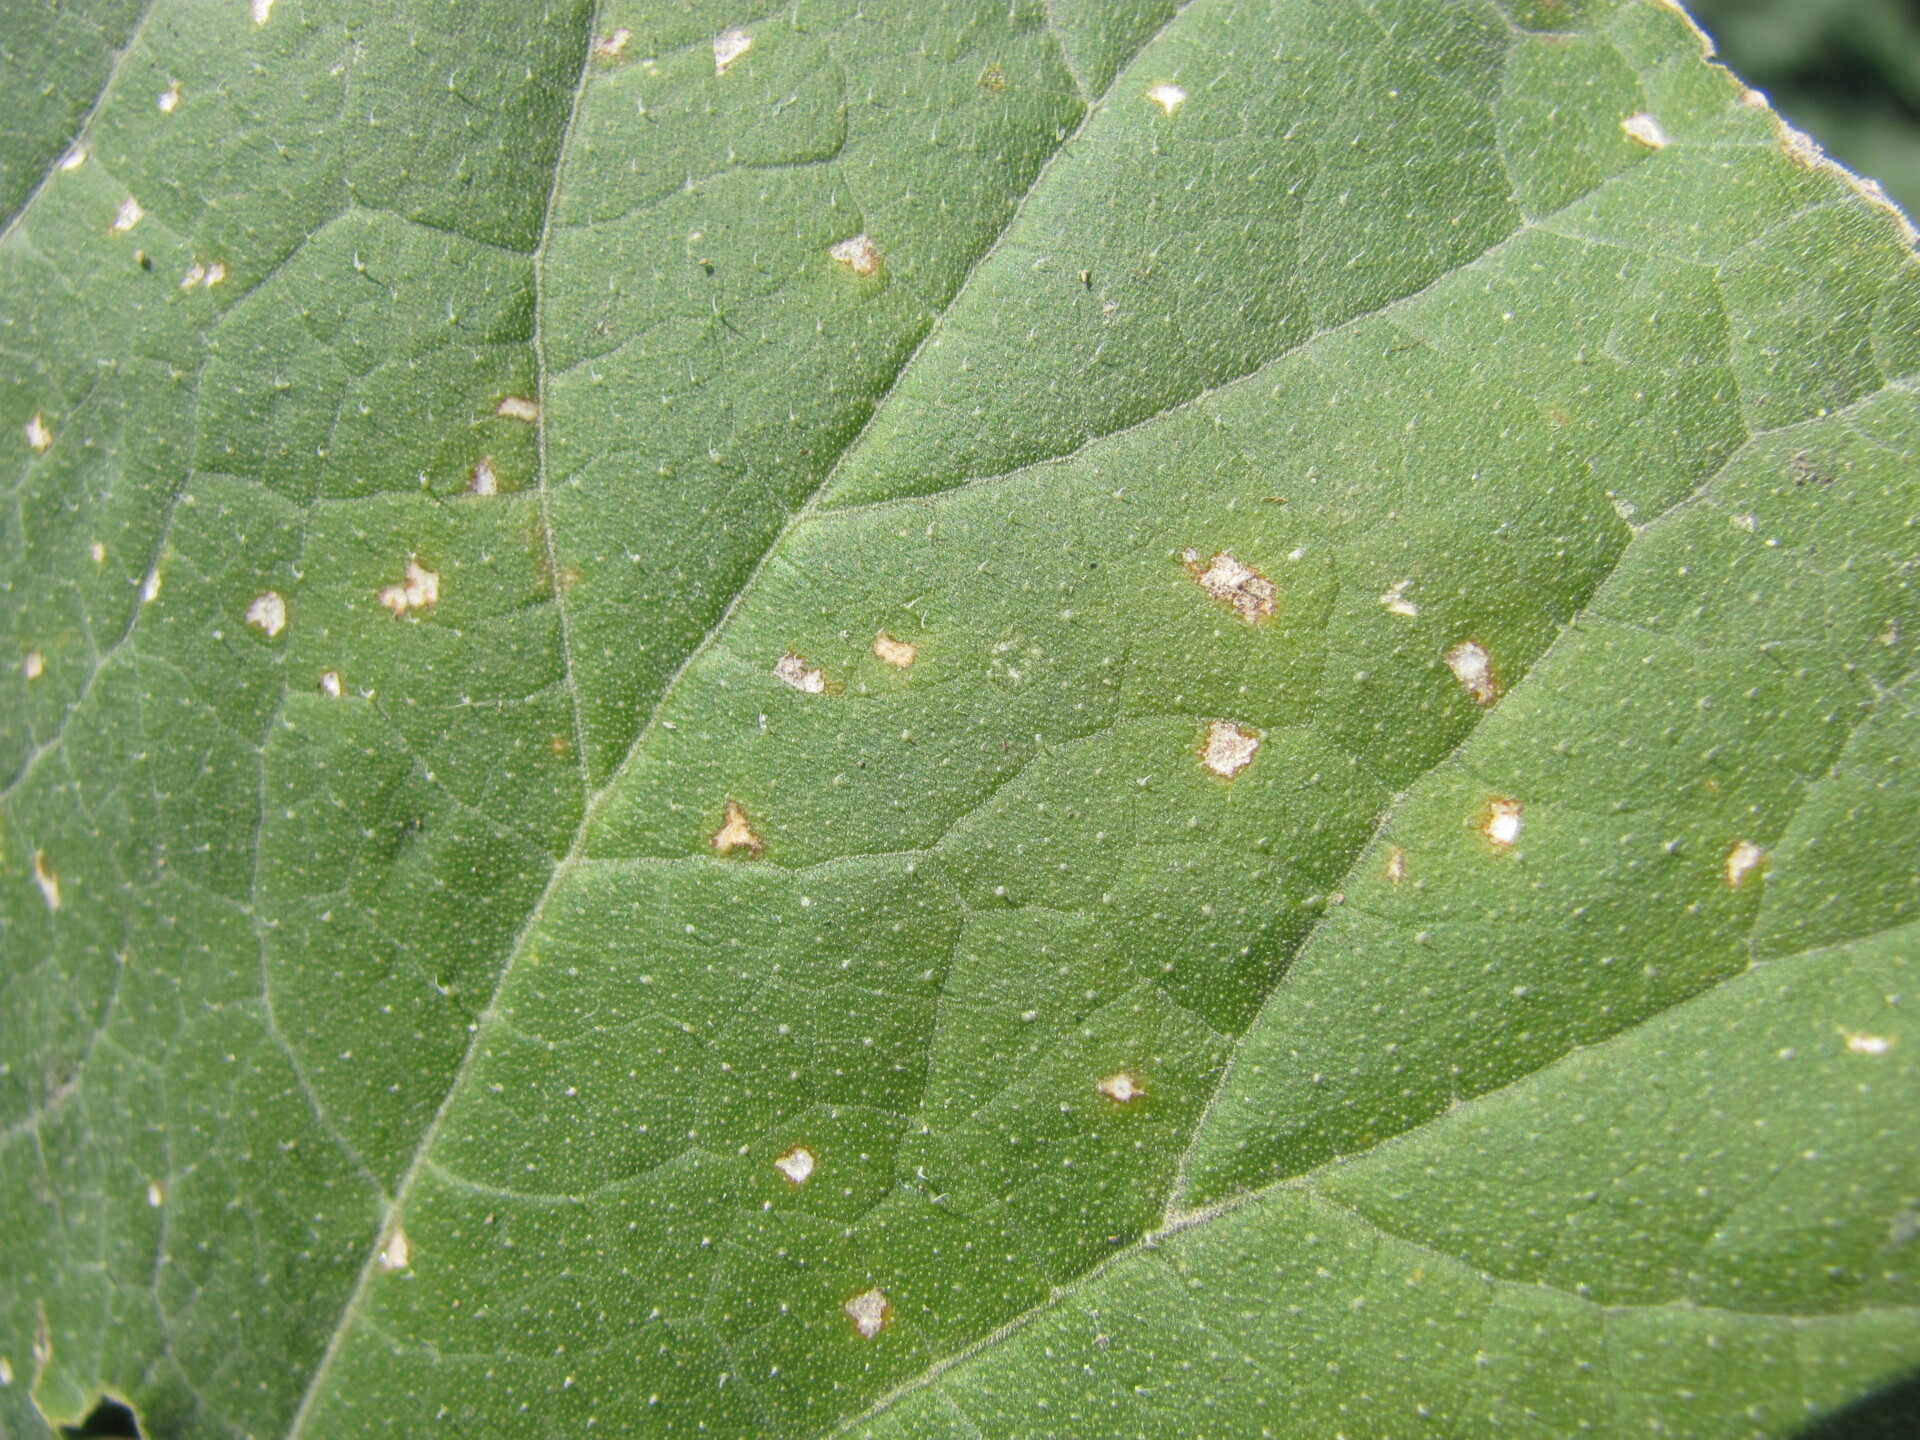 Figure 2. Cercospora leaf spot of pumpkin.